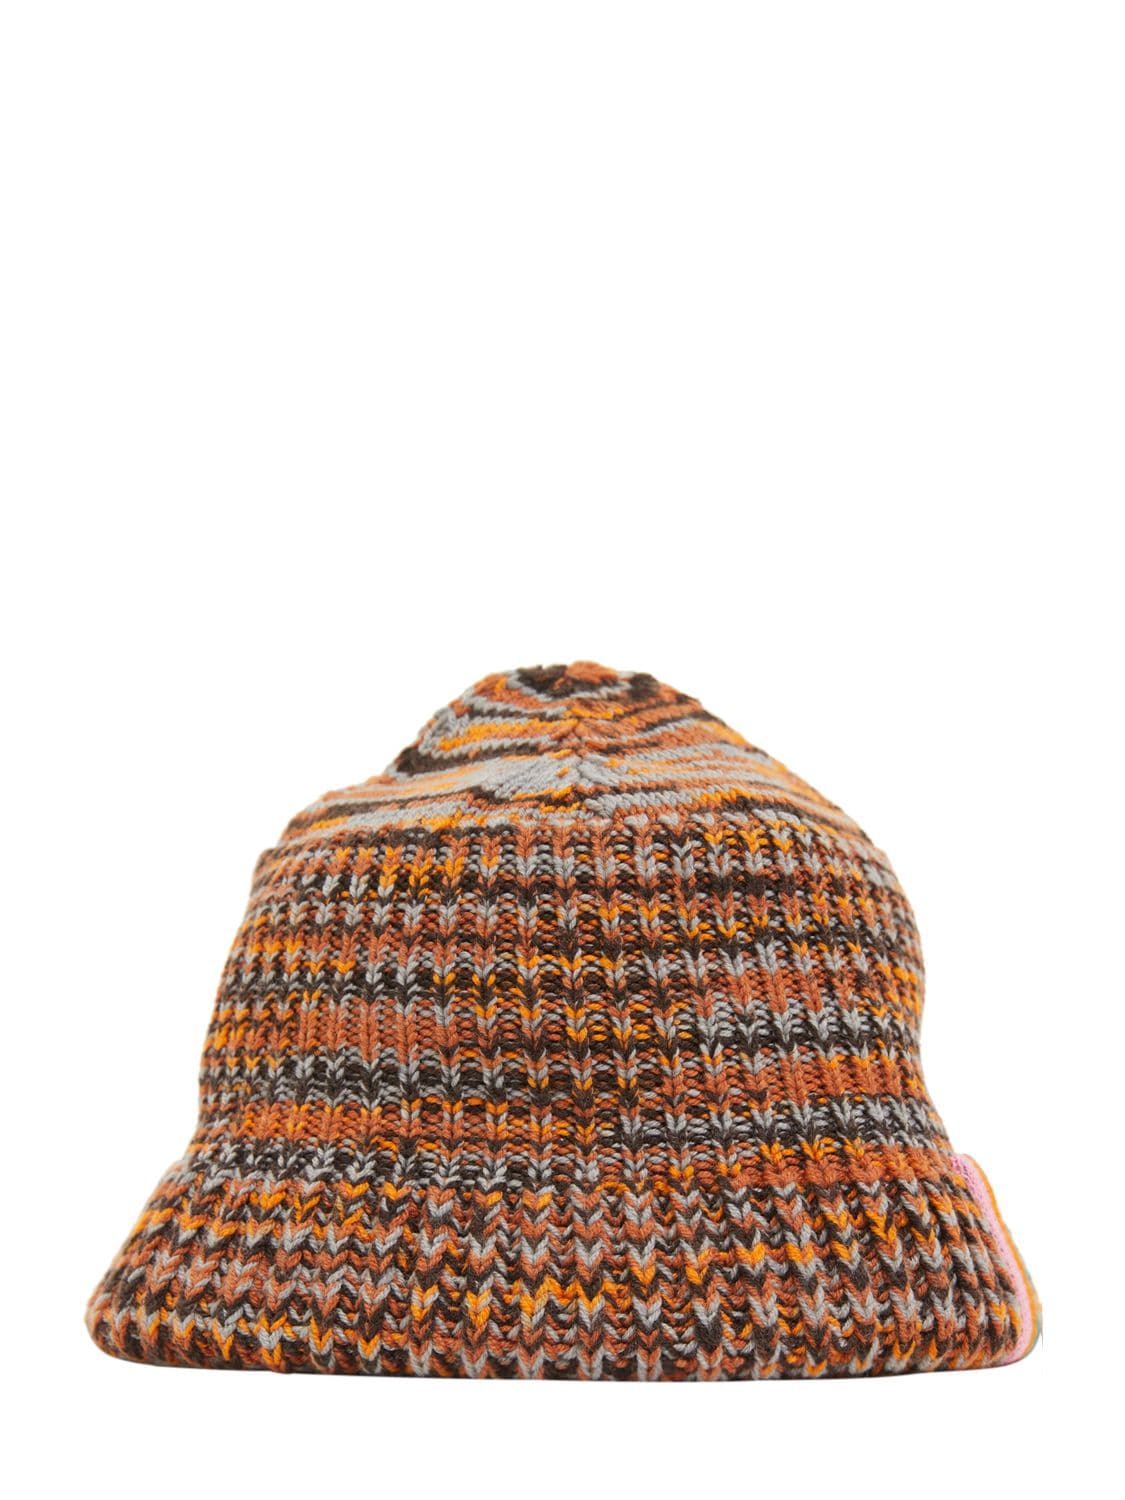 Knitted Wool Hat Luisaviaroma Women Accessories Headwear Hats 